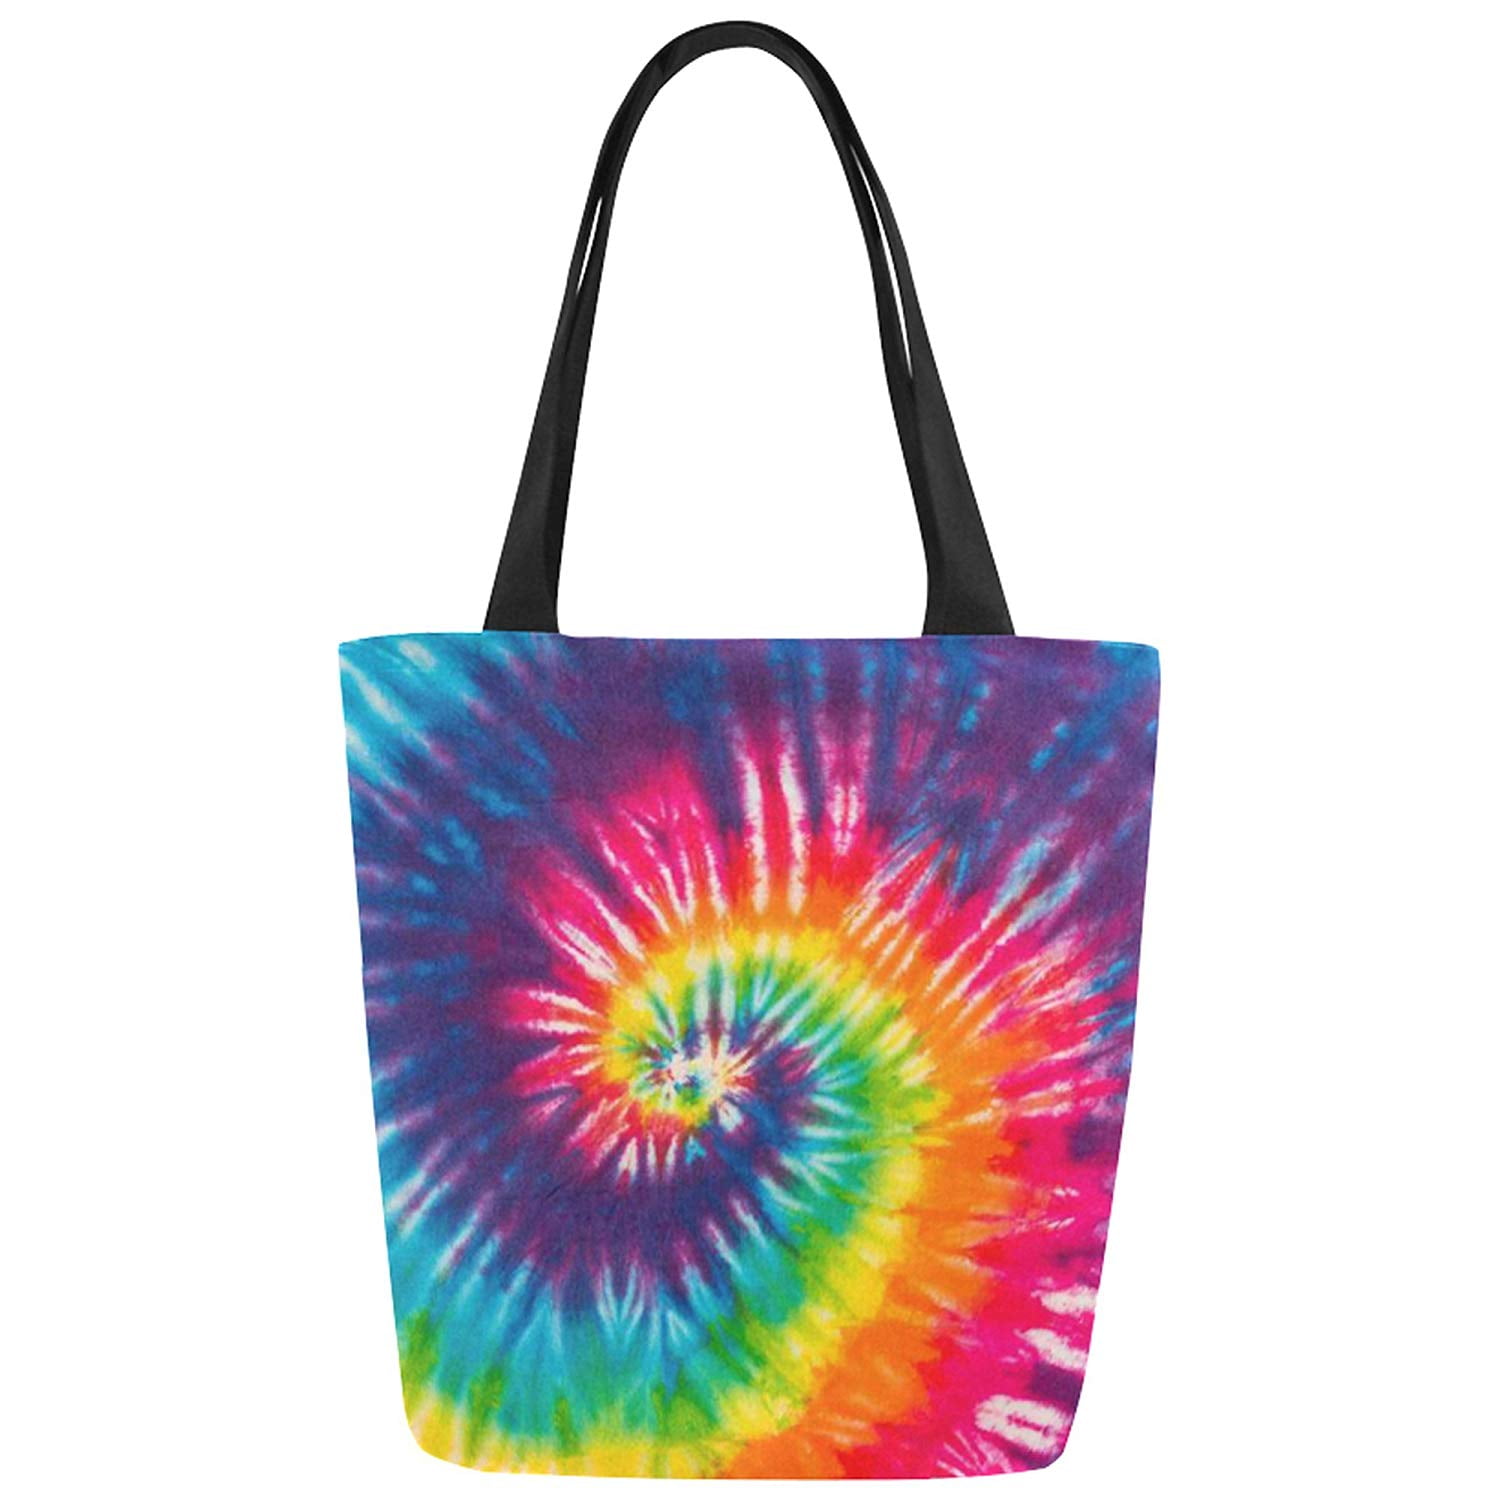 Hatiart Rainbow Tie Dye Canvas Tote Bag Shoulder Handbag For Women